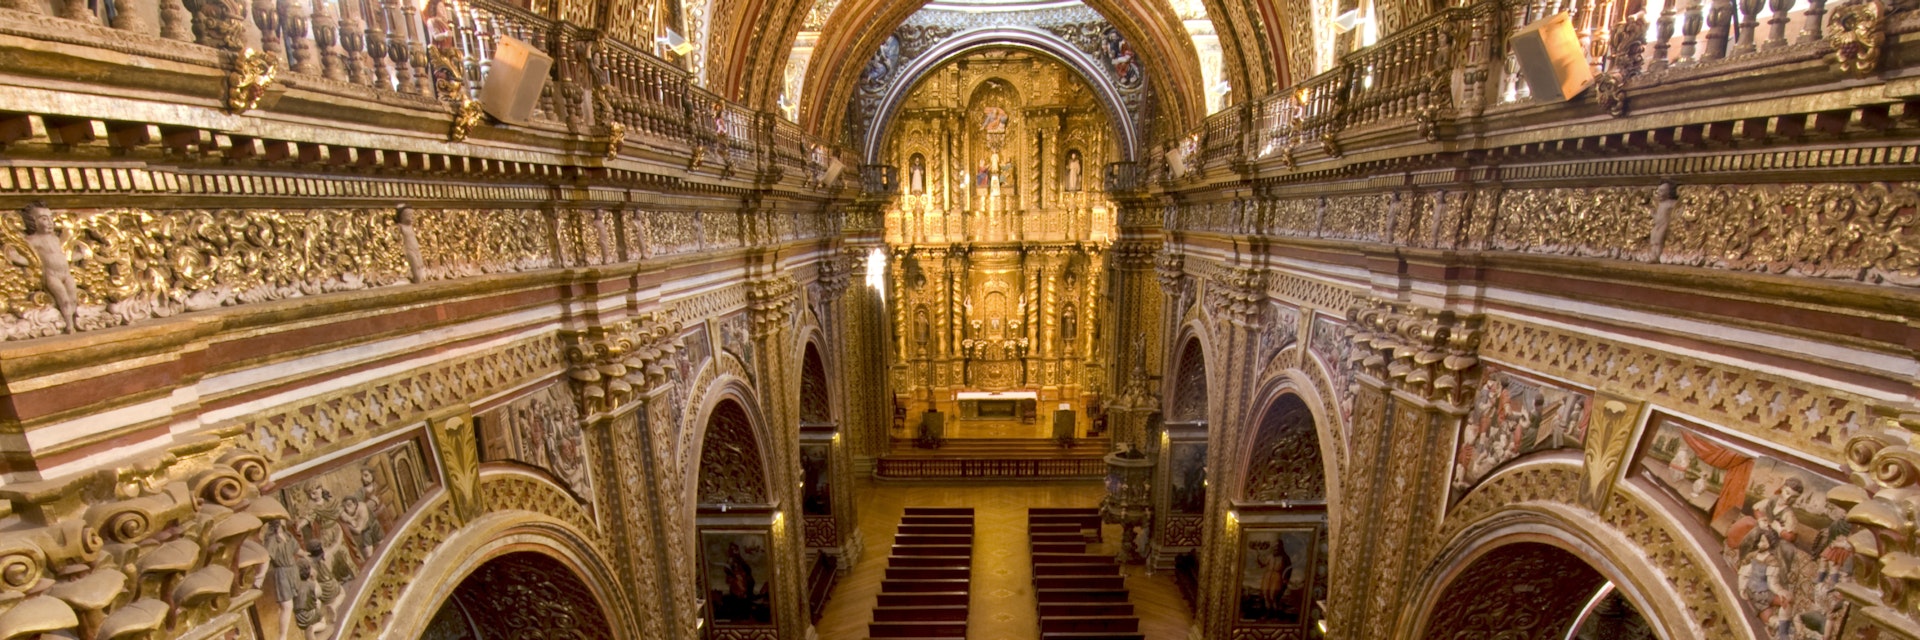 Central nave and altar inside La Compania de Jesus (Church of the Society of Jesus).